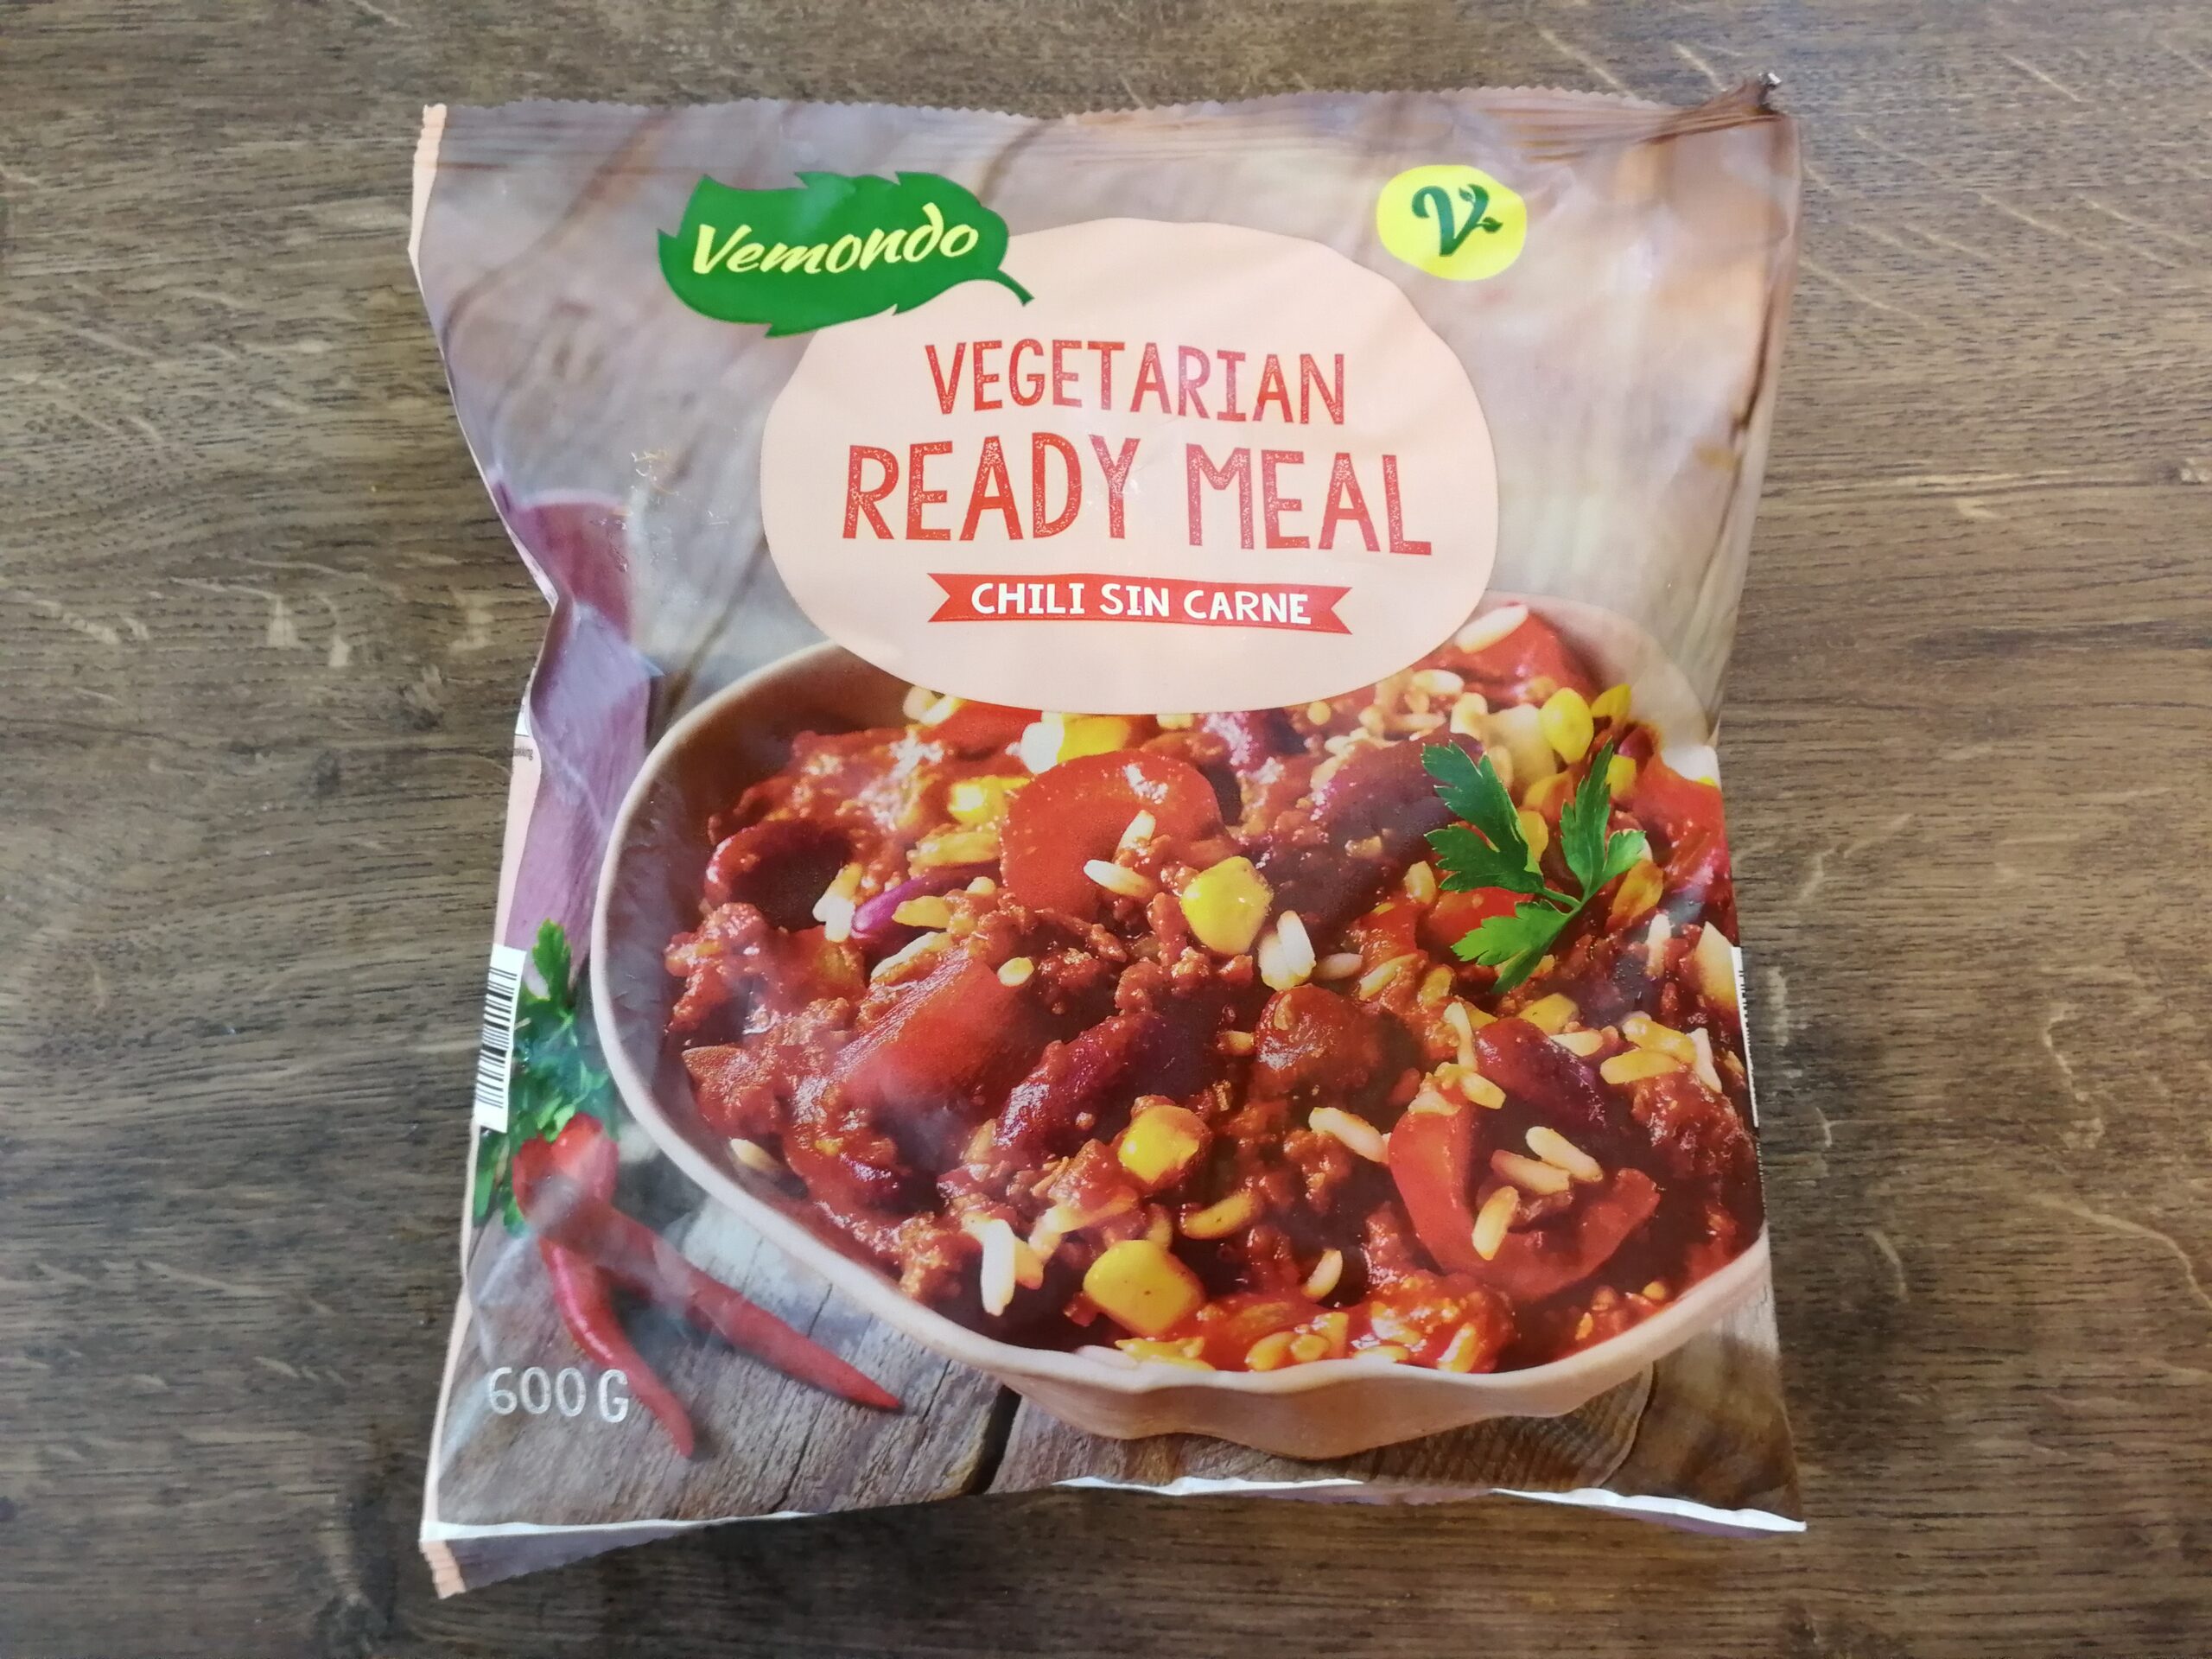 Chili Sin Carne – Vegetarian Ready Meal, fra Vemondo, i Lidl